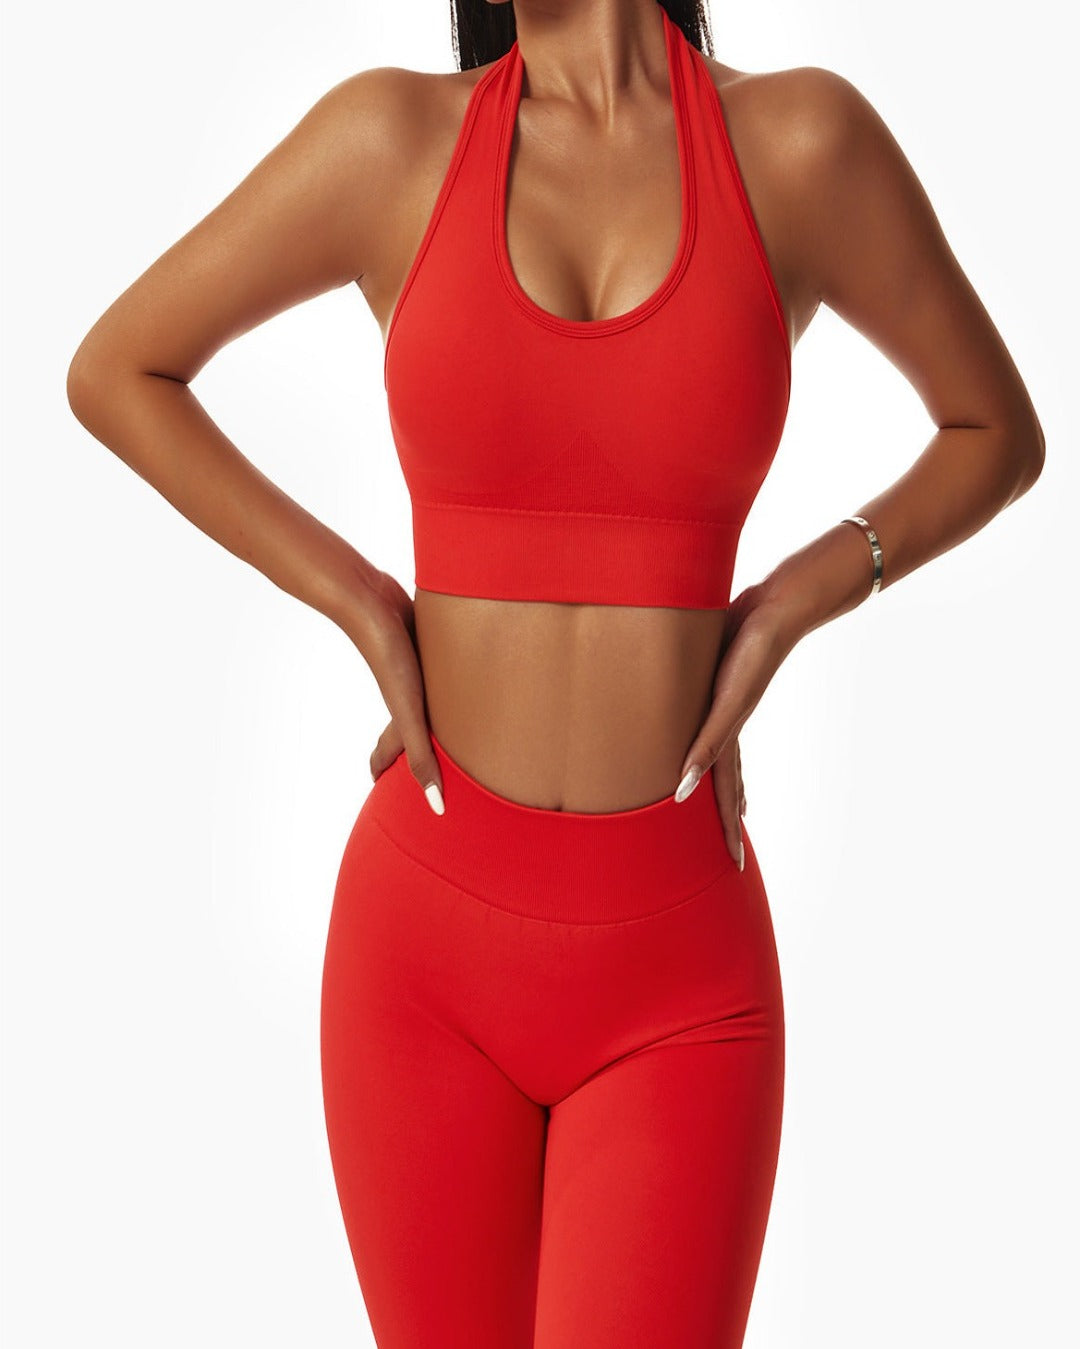 high waist seamless leggings - lava red